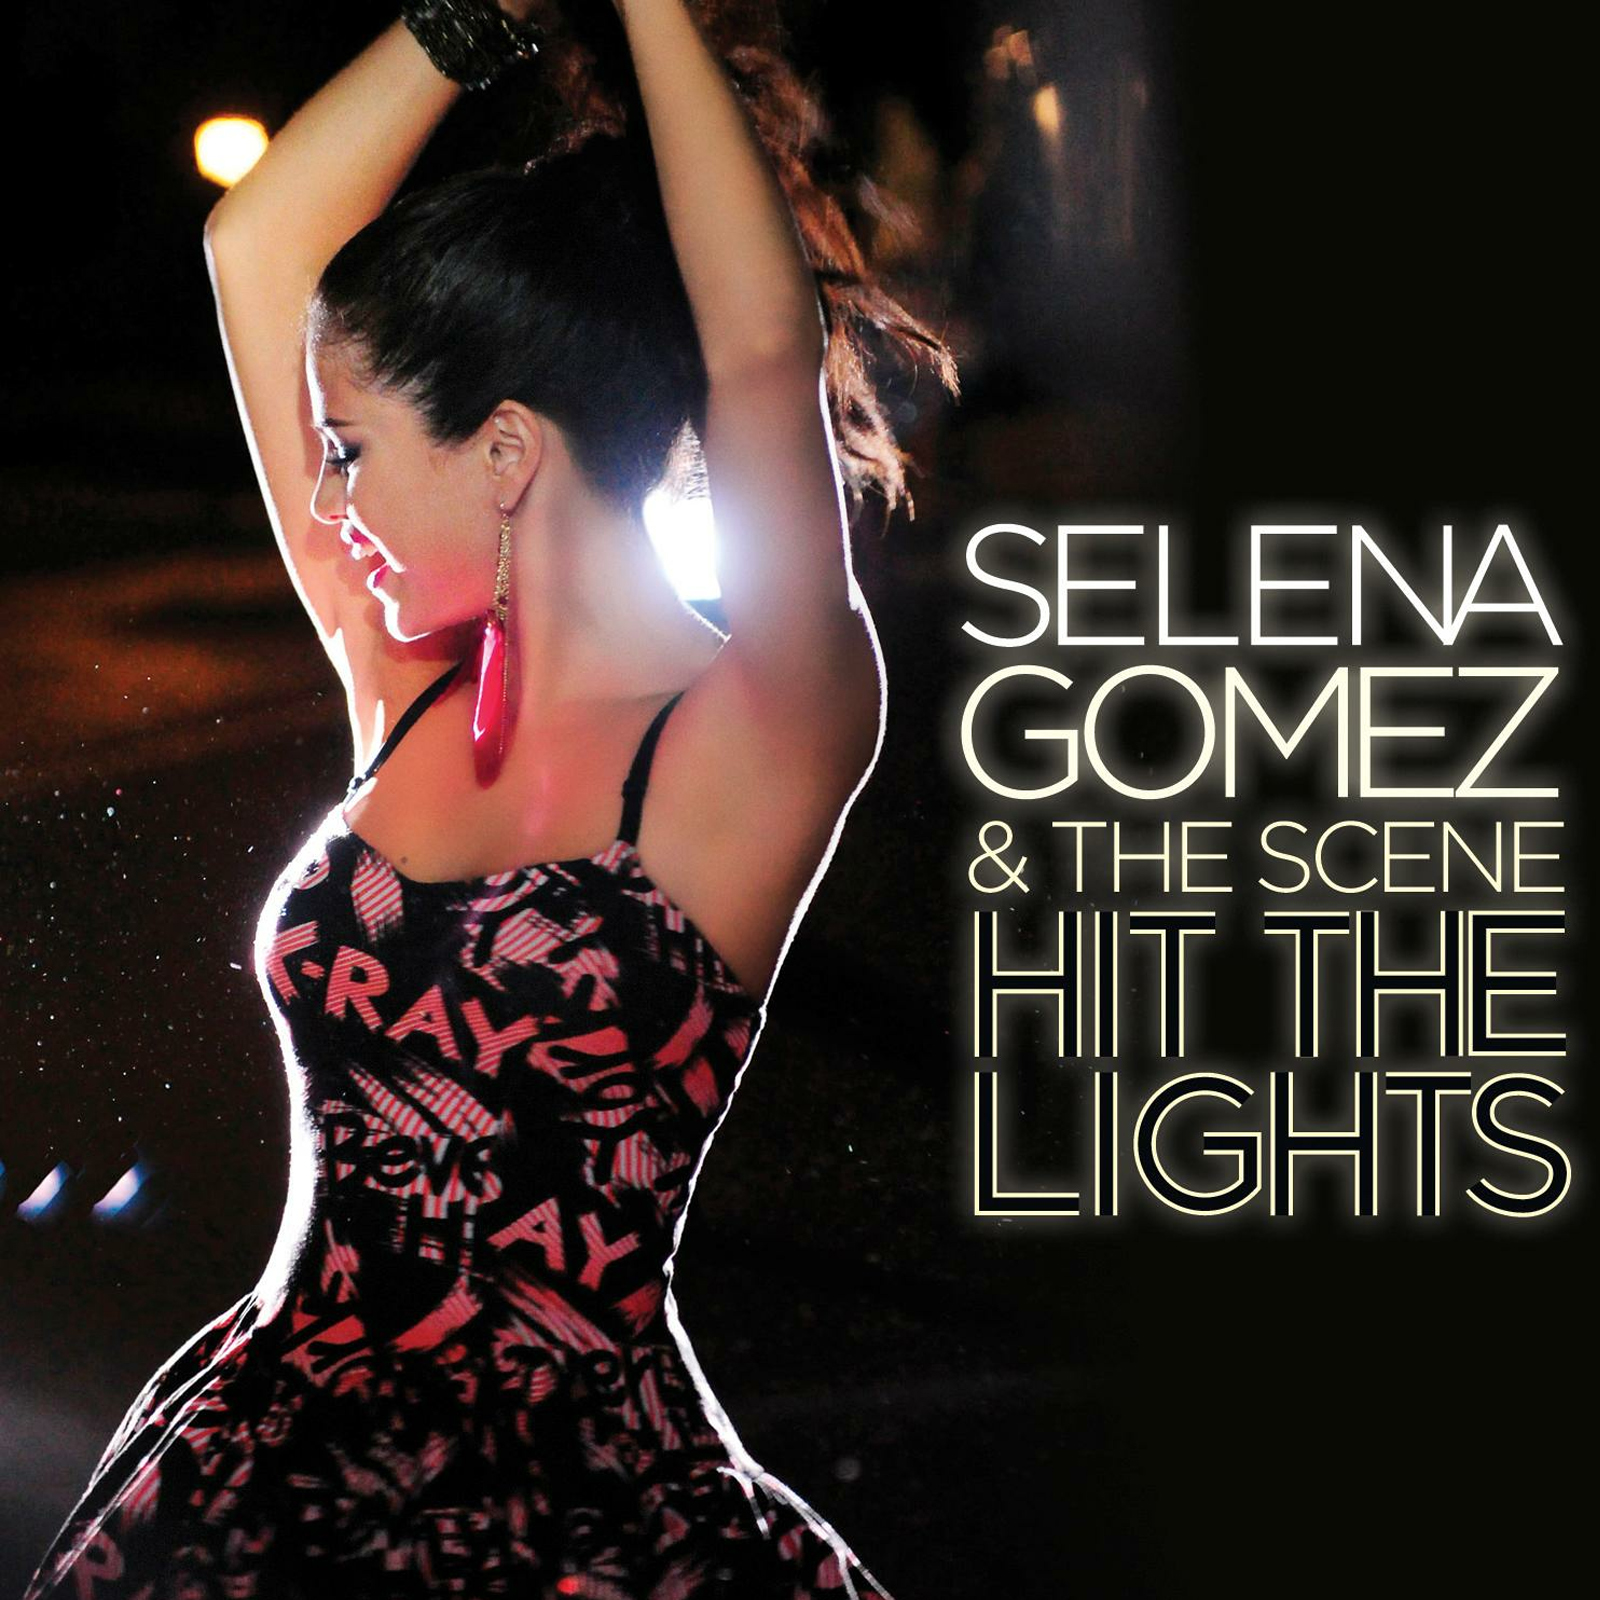 Scene музыка. Selena Gomez the Scene Hit the Lights. Обложки синглов Селены Гомес. Selena Gomez & the Scene обложка. Музыкальный альбом Селены Гомес.